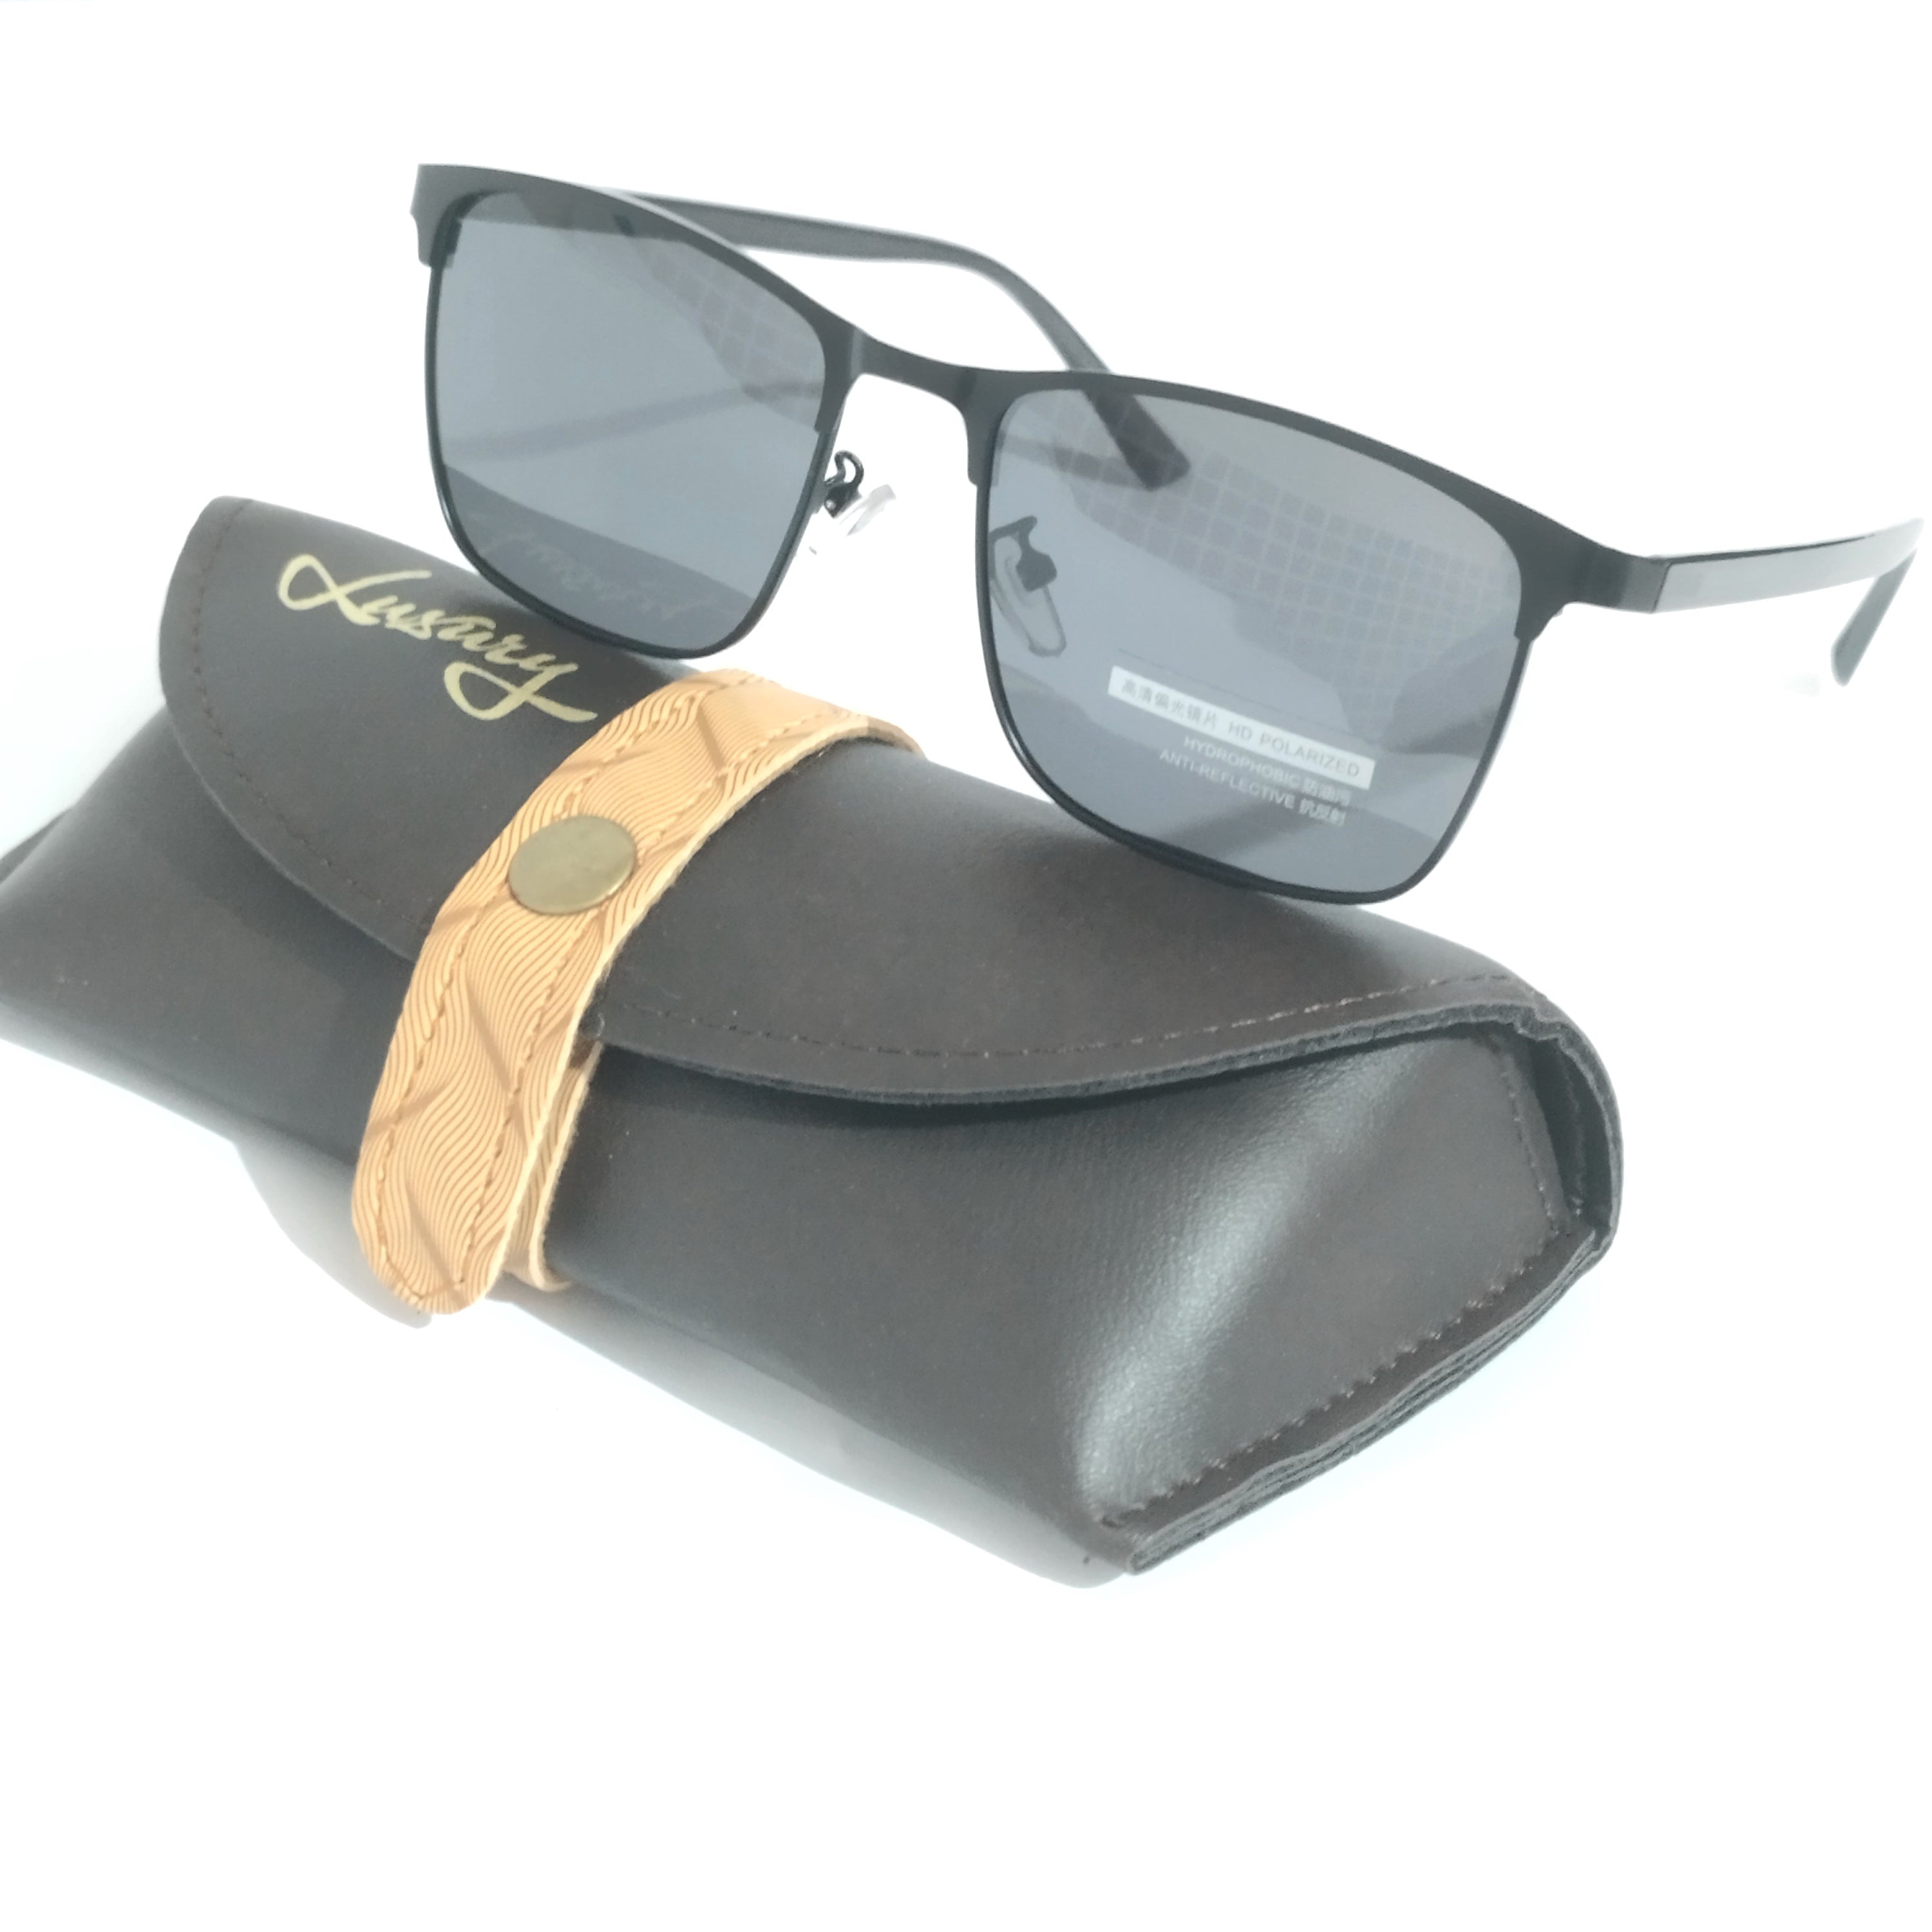 Buy Sunglasses Online - Explore Stylish Goggles & Shades